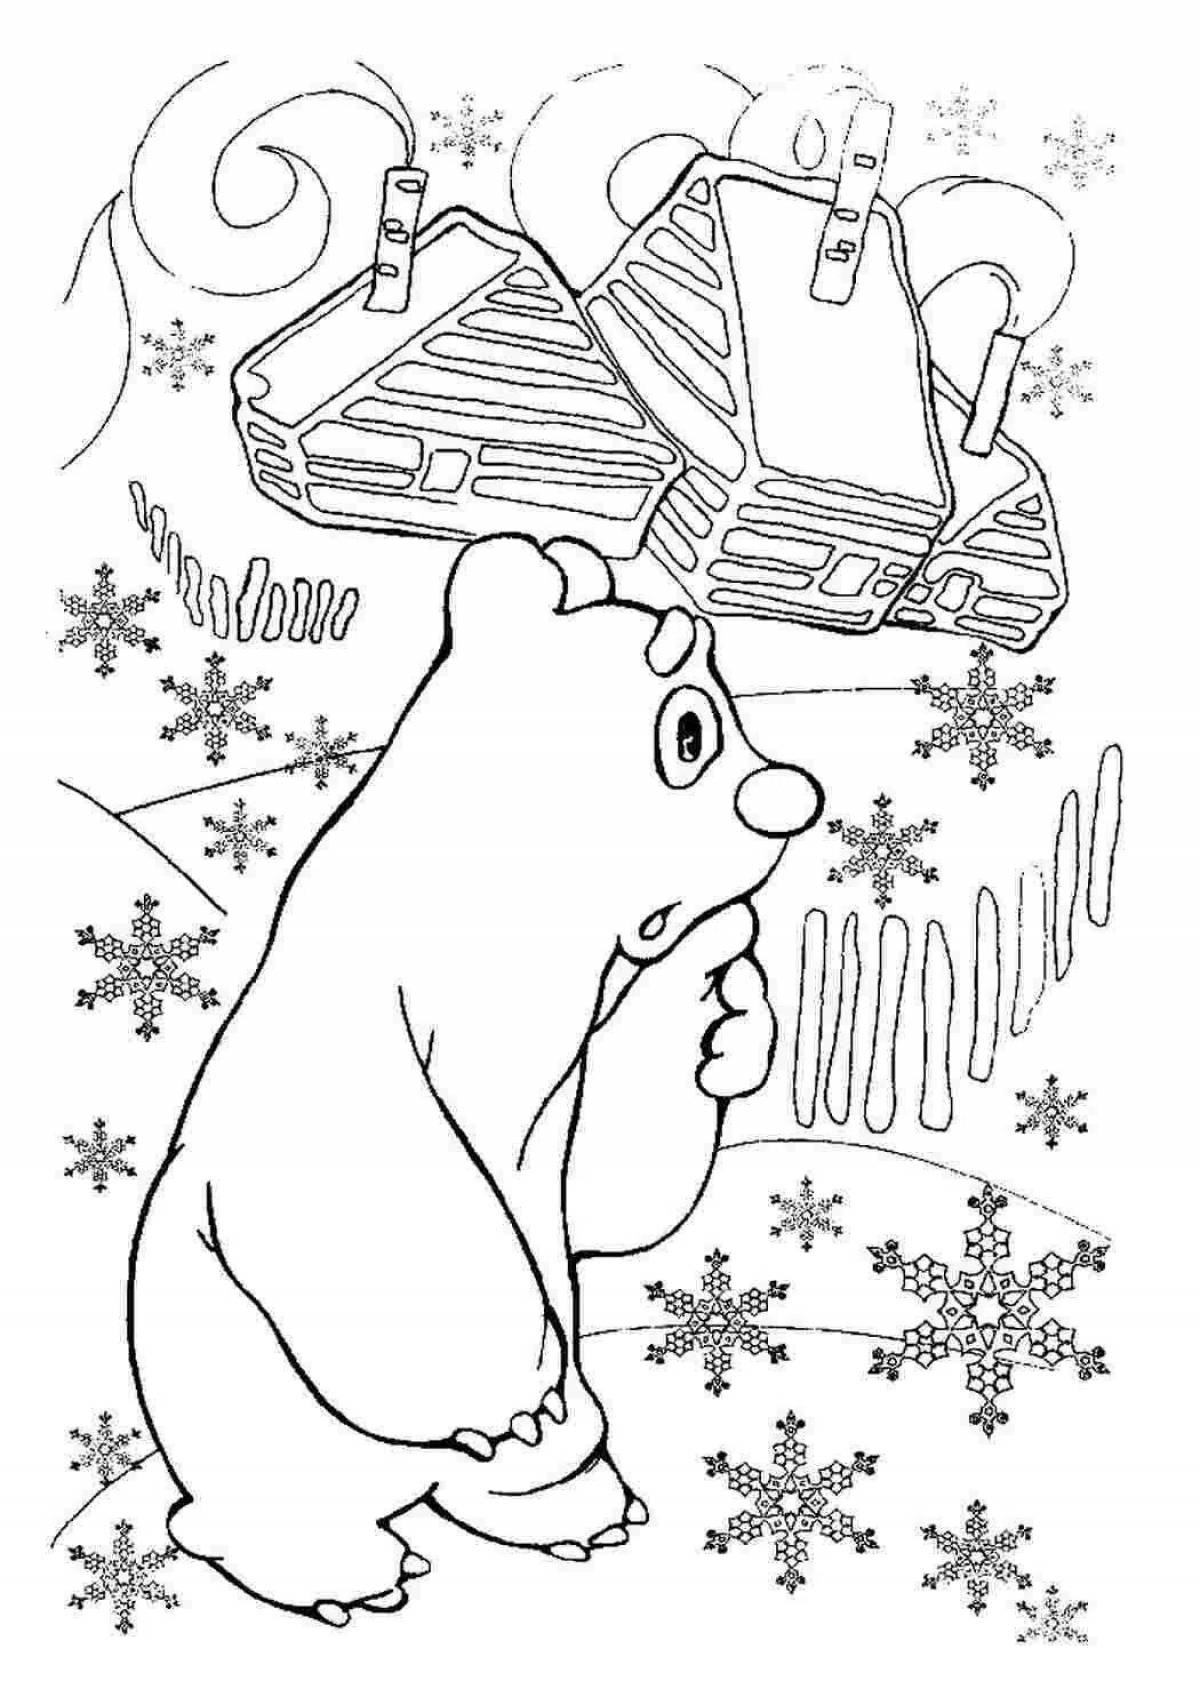 Charming teddy bear umka coloring book